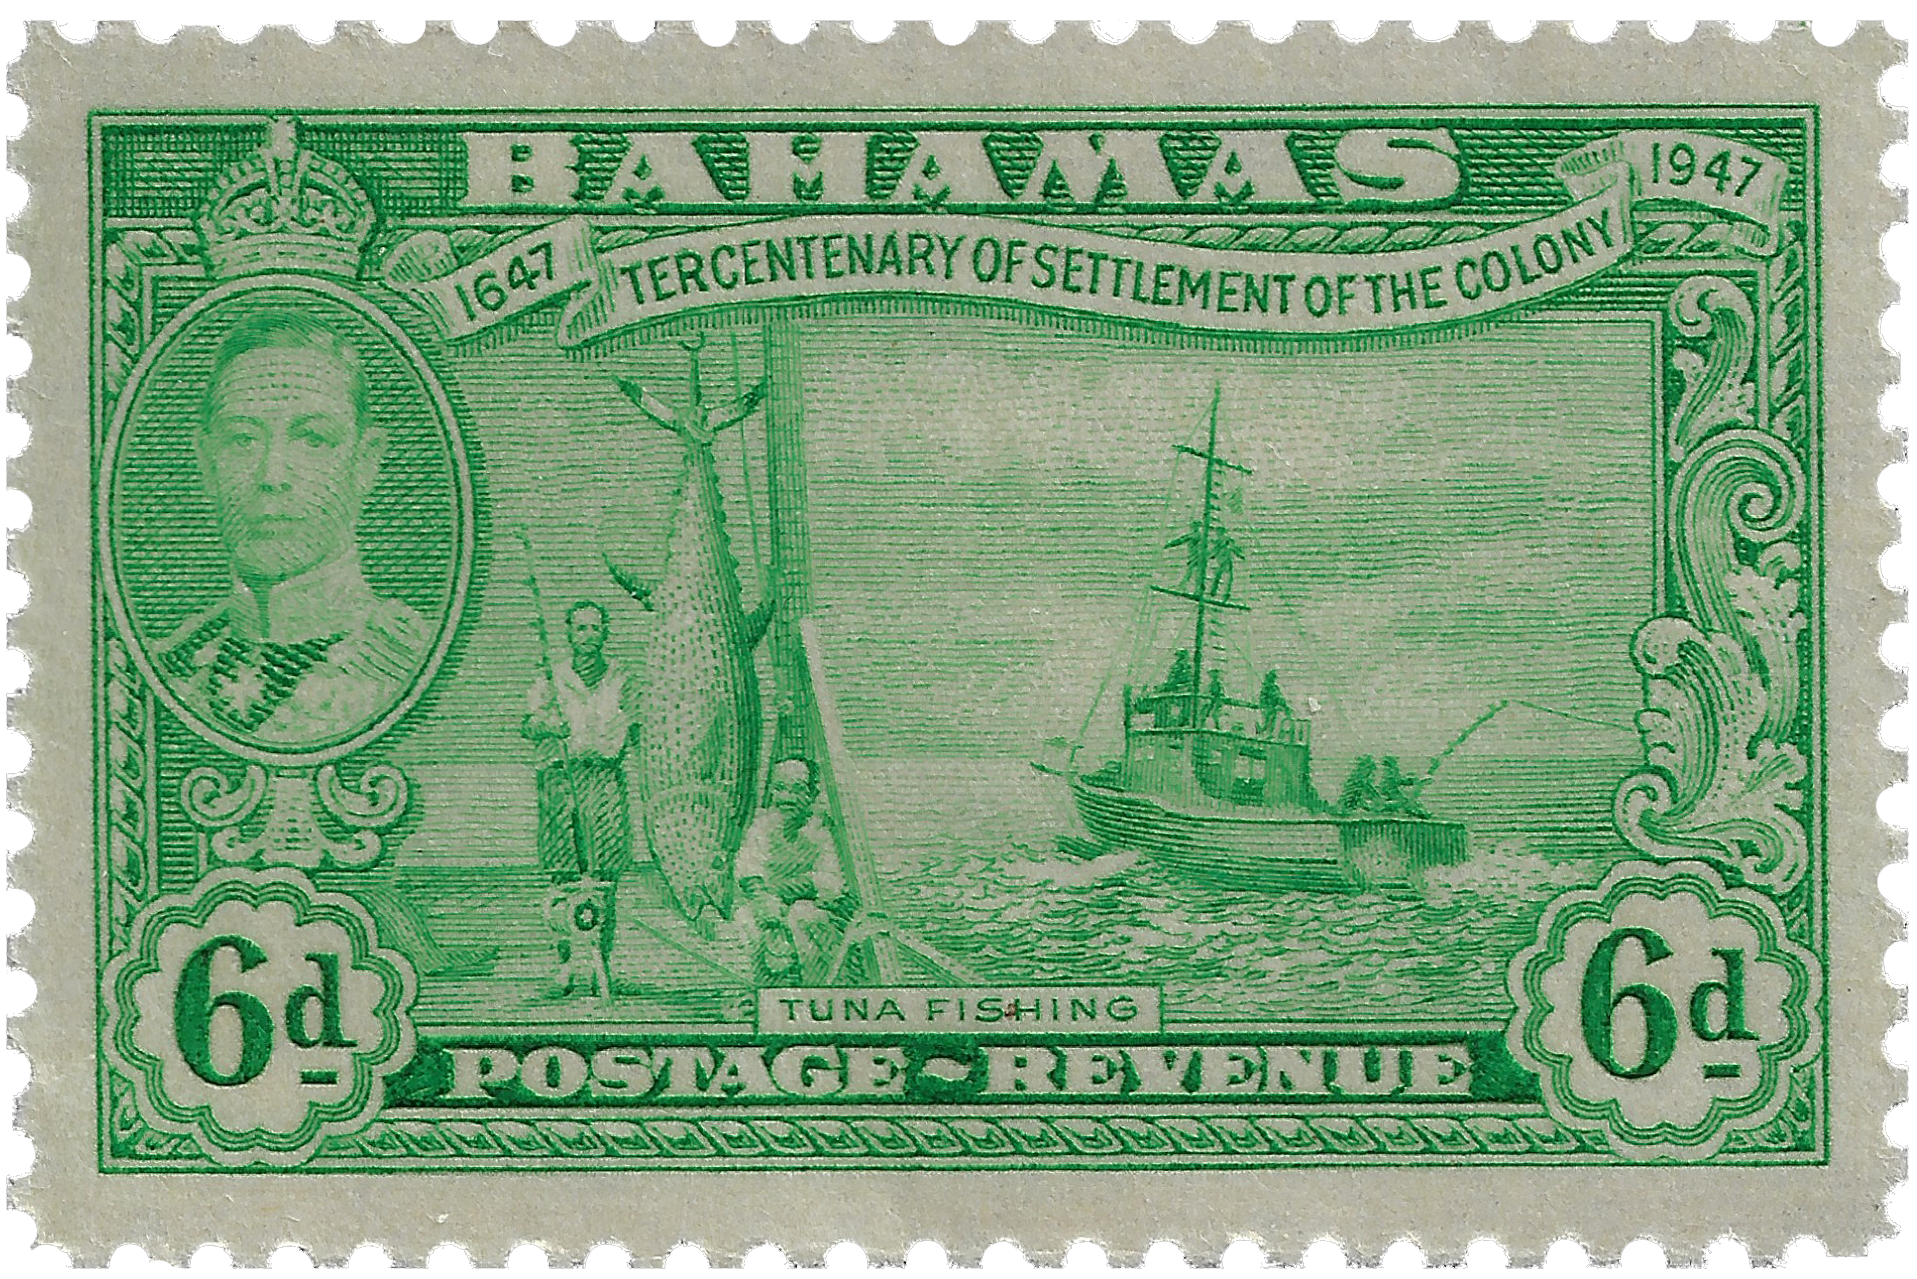 6d 1948, 1647 Tercentenary of Settlement of the Colony, Tuna Fishing